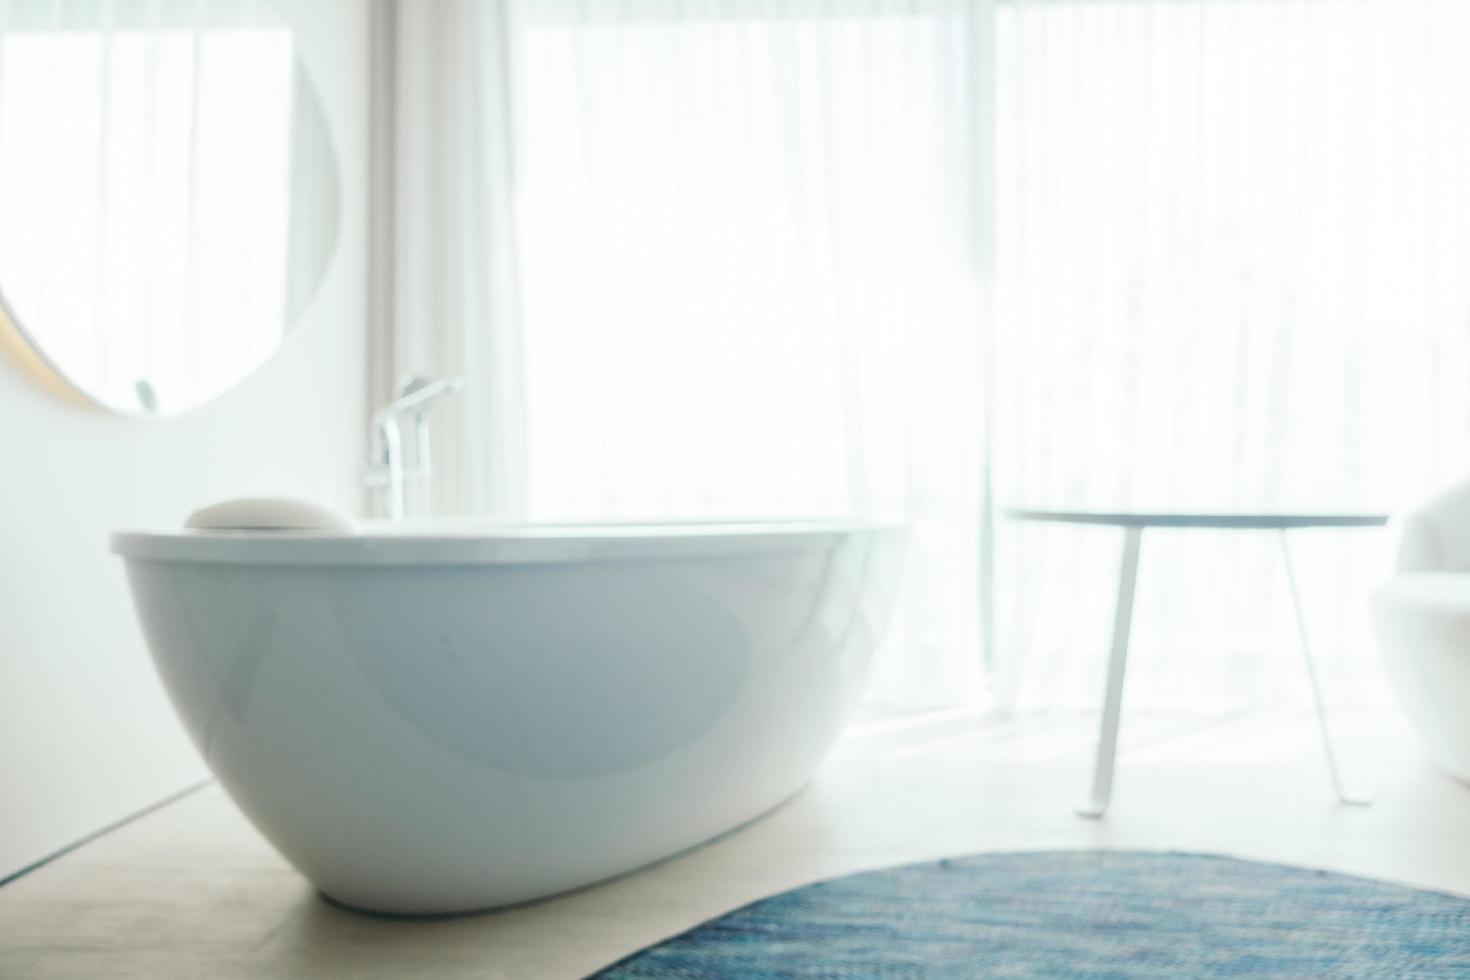 Abstract blur and defocused bathtub decoration interior of room photo